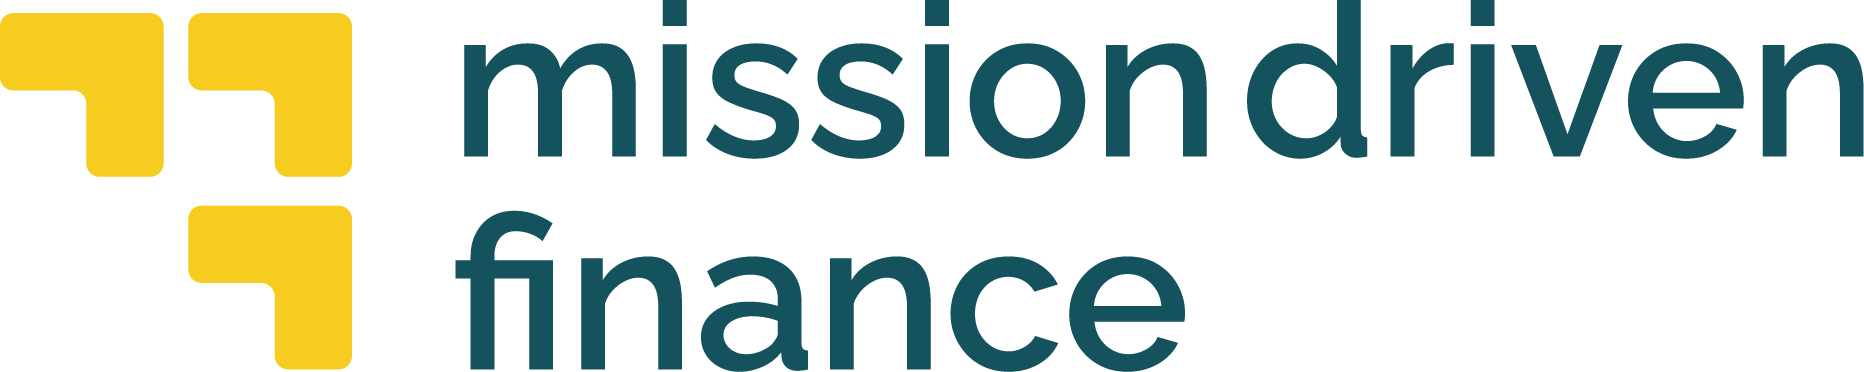 Mission Driven Finance Logo